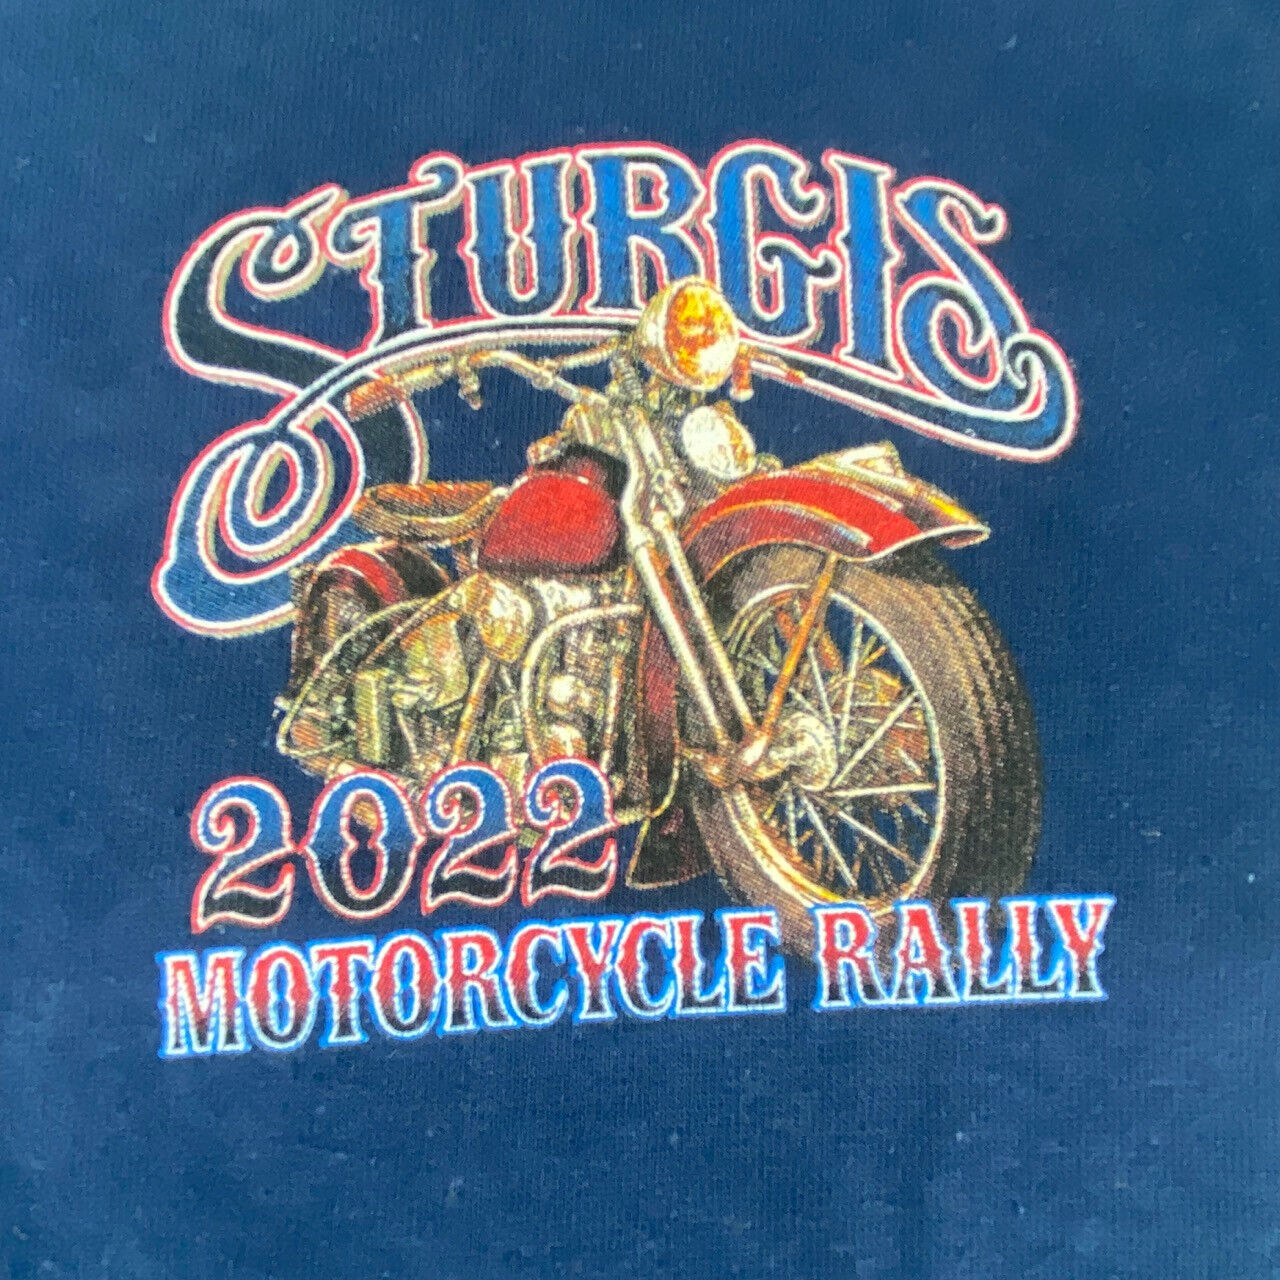 Sturgis Motorcycle Rally 2022 blue t-shirt large South Dakota Black Hills rider